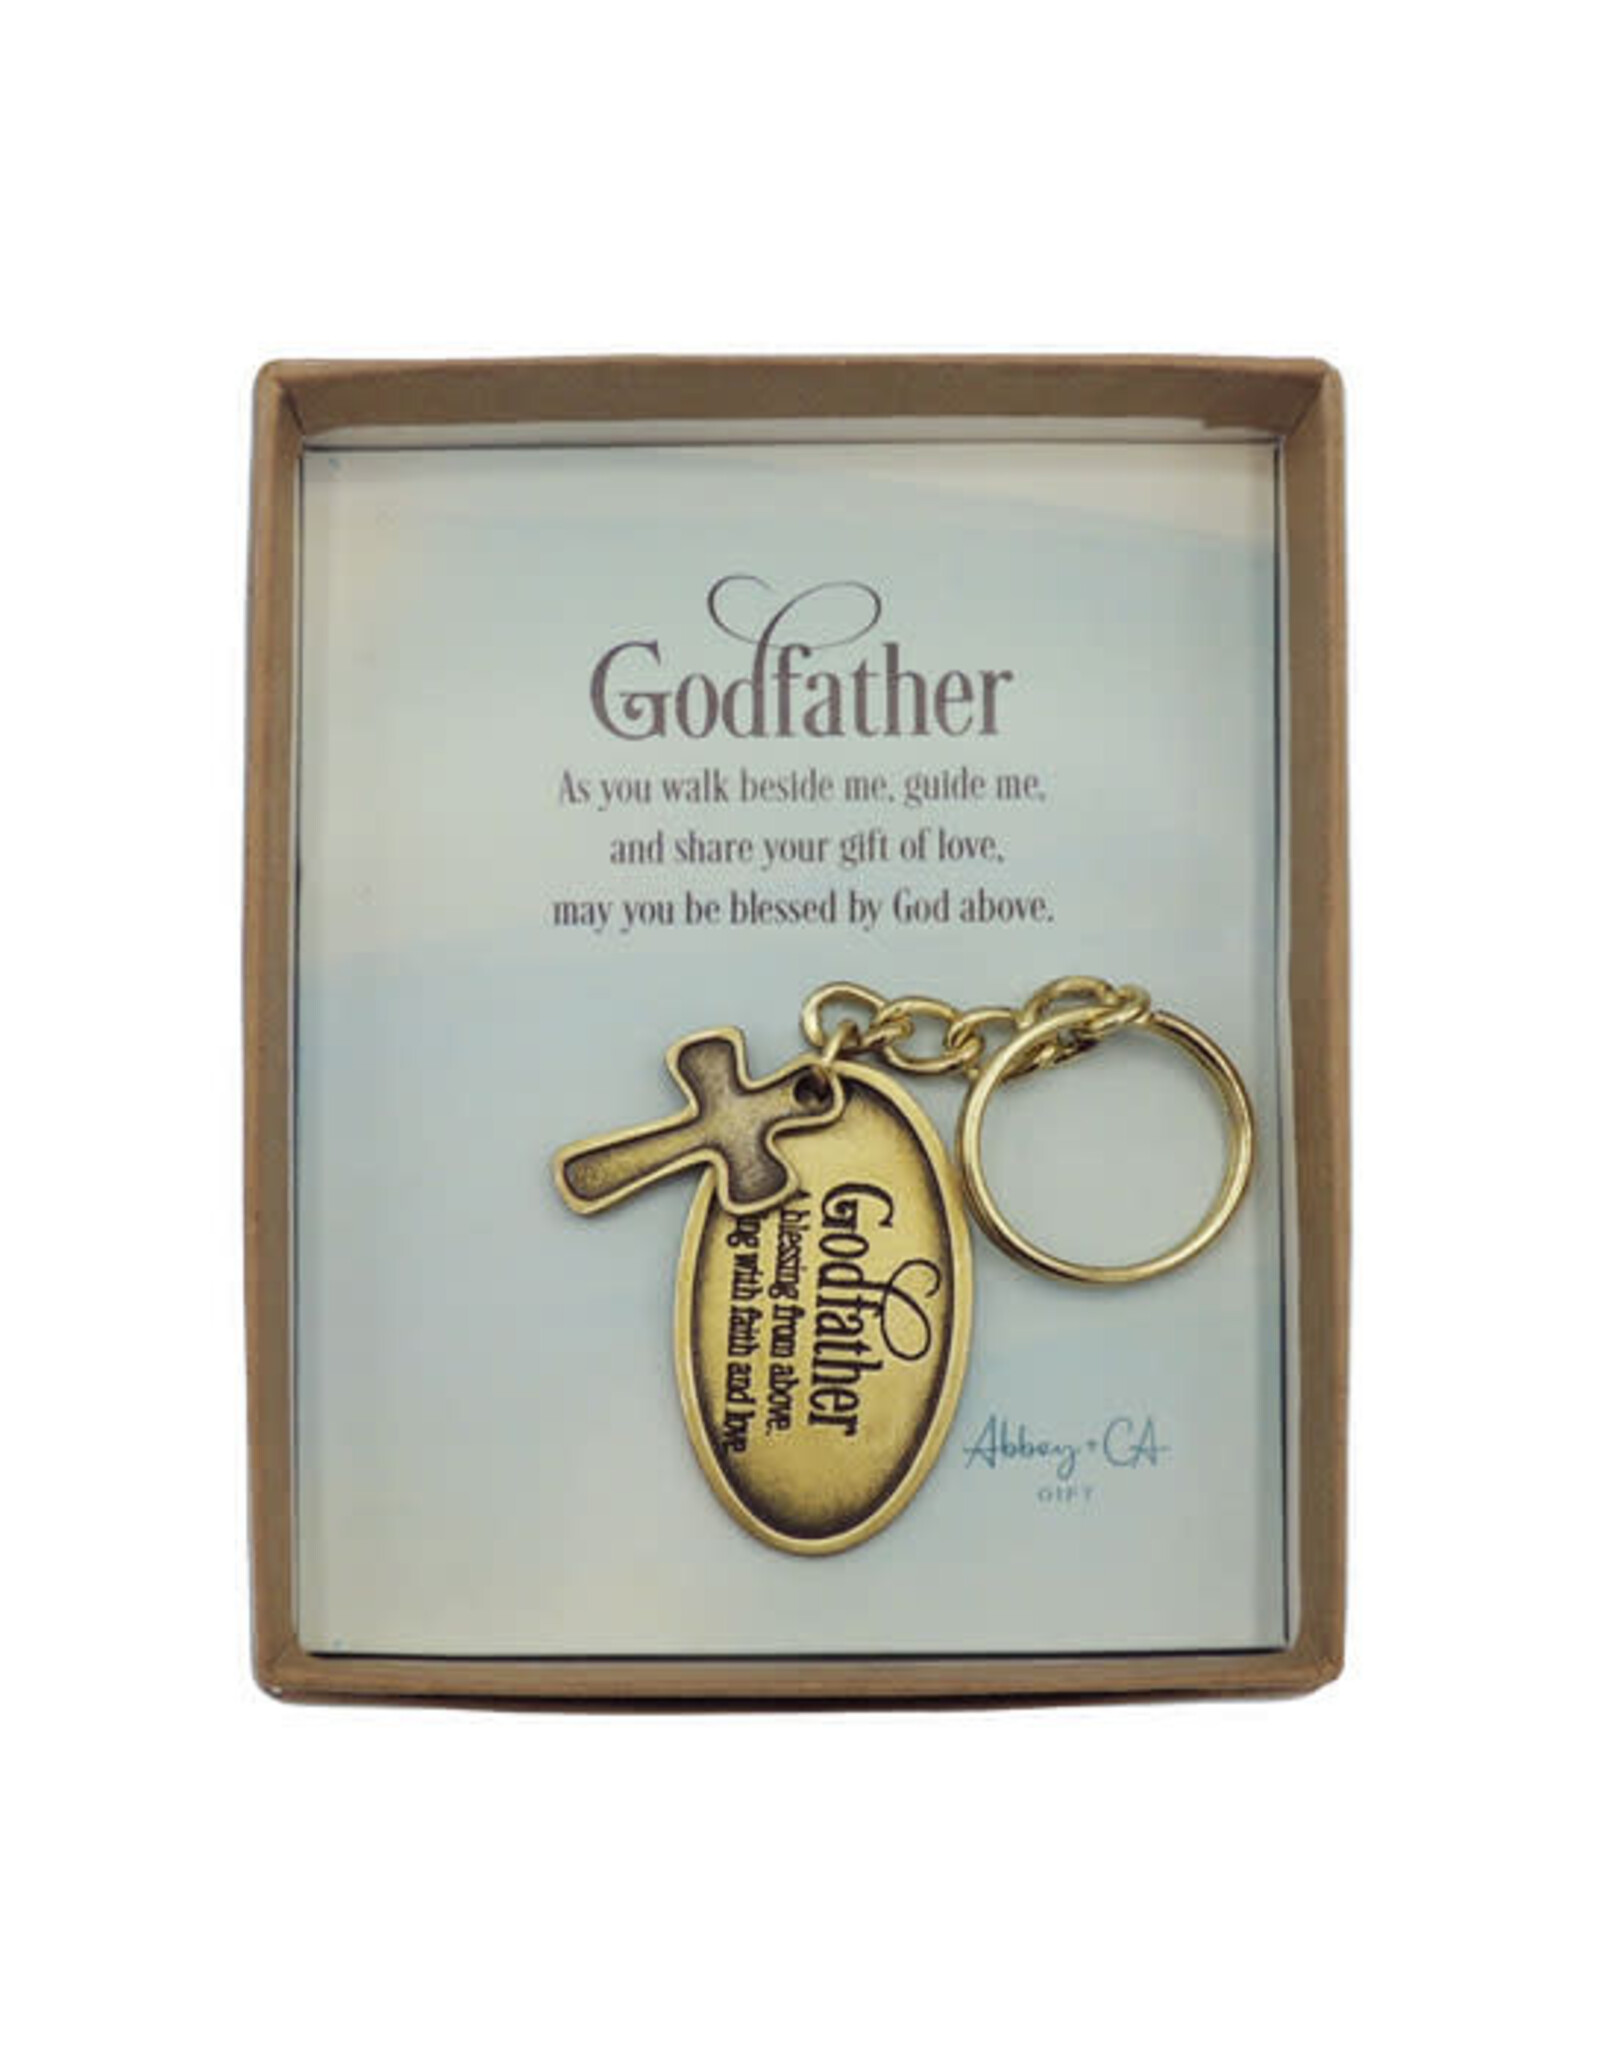 Abbey & CA Gift Godfather Key Ring